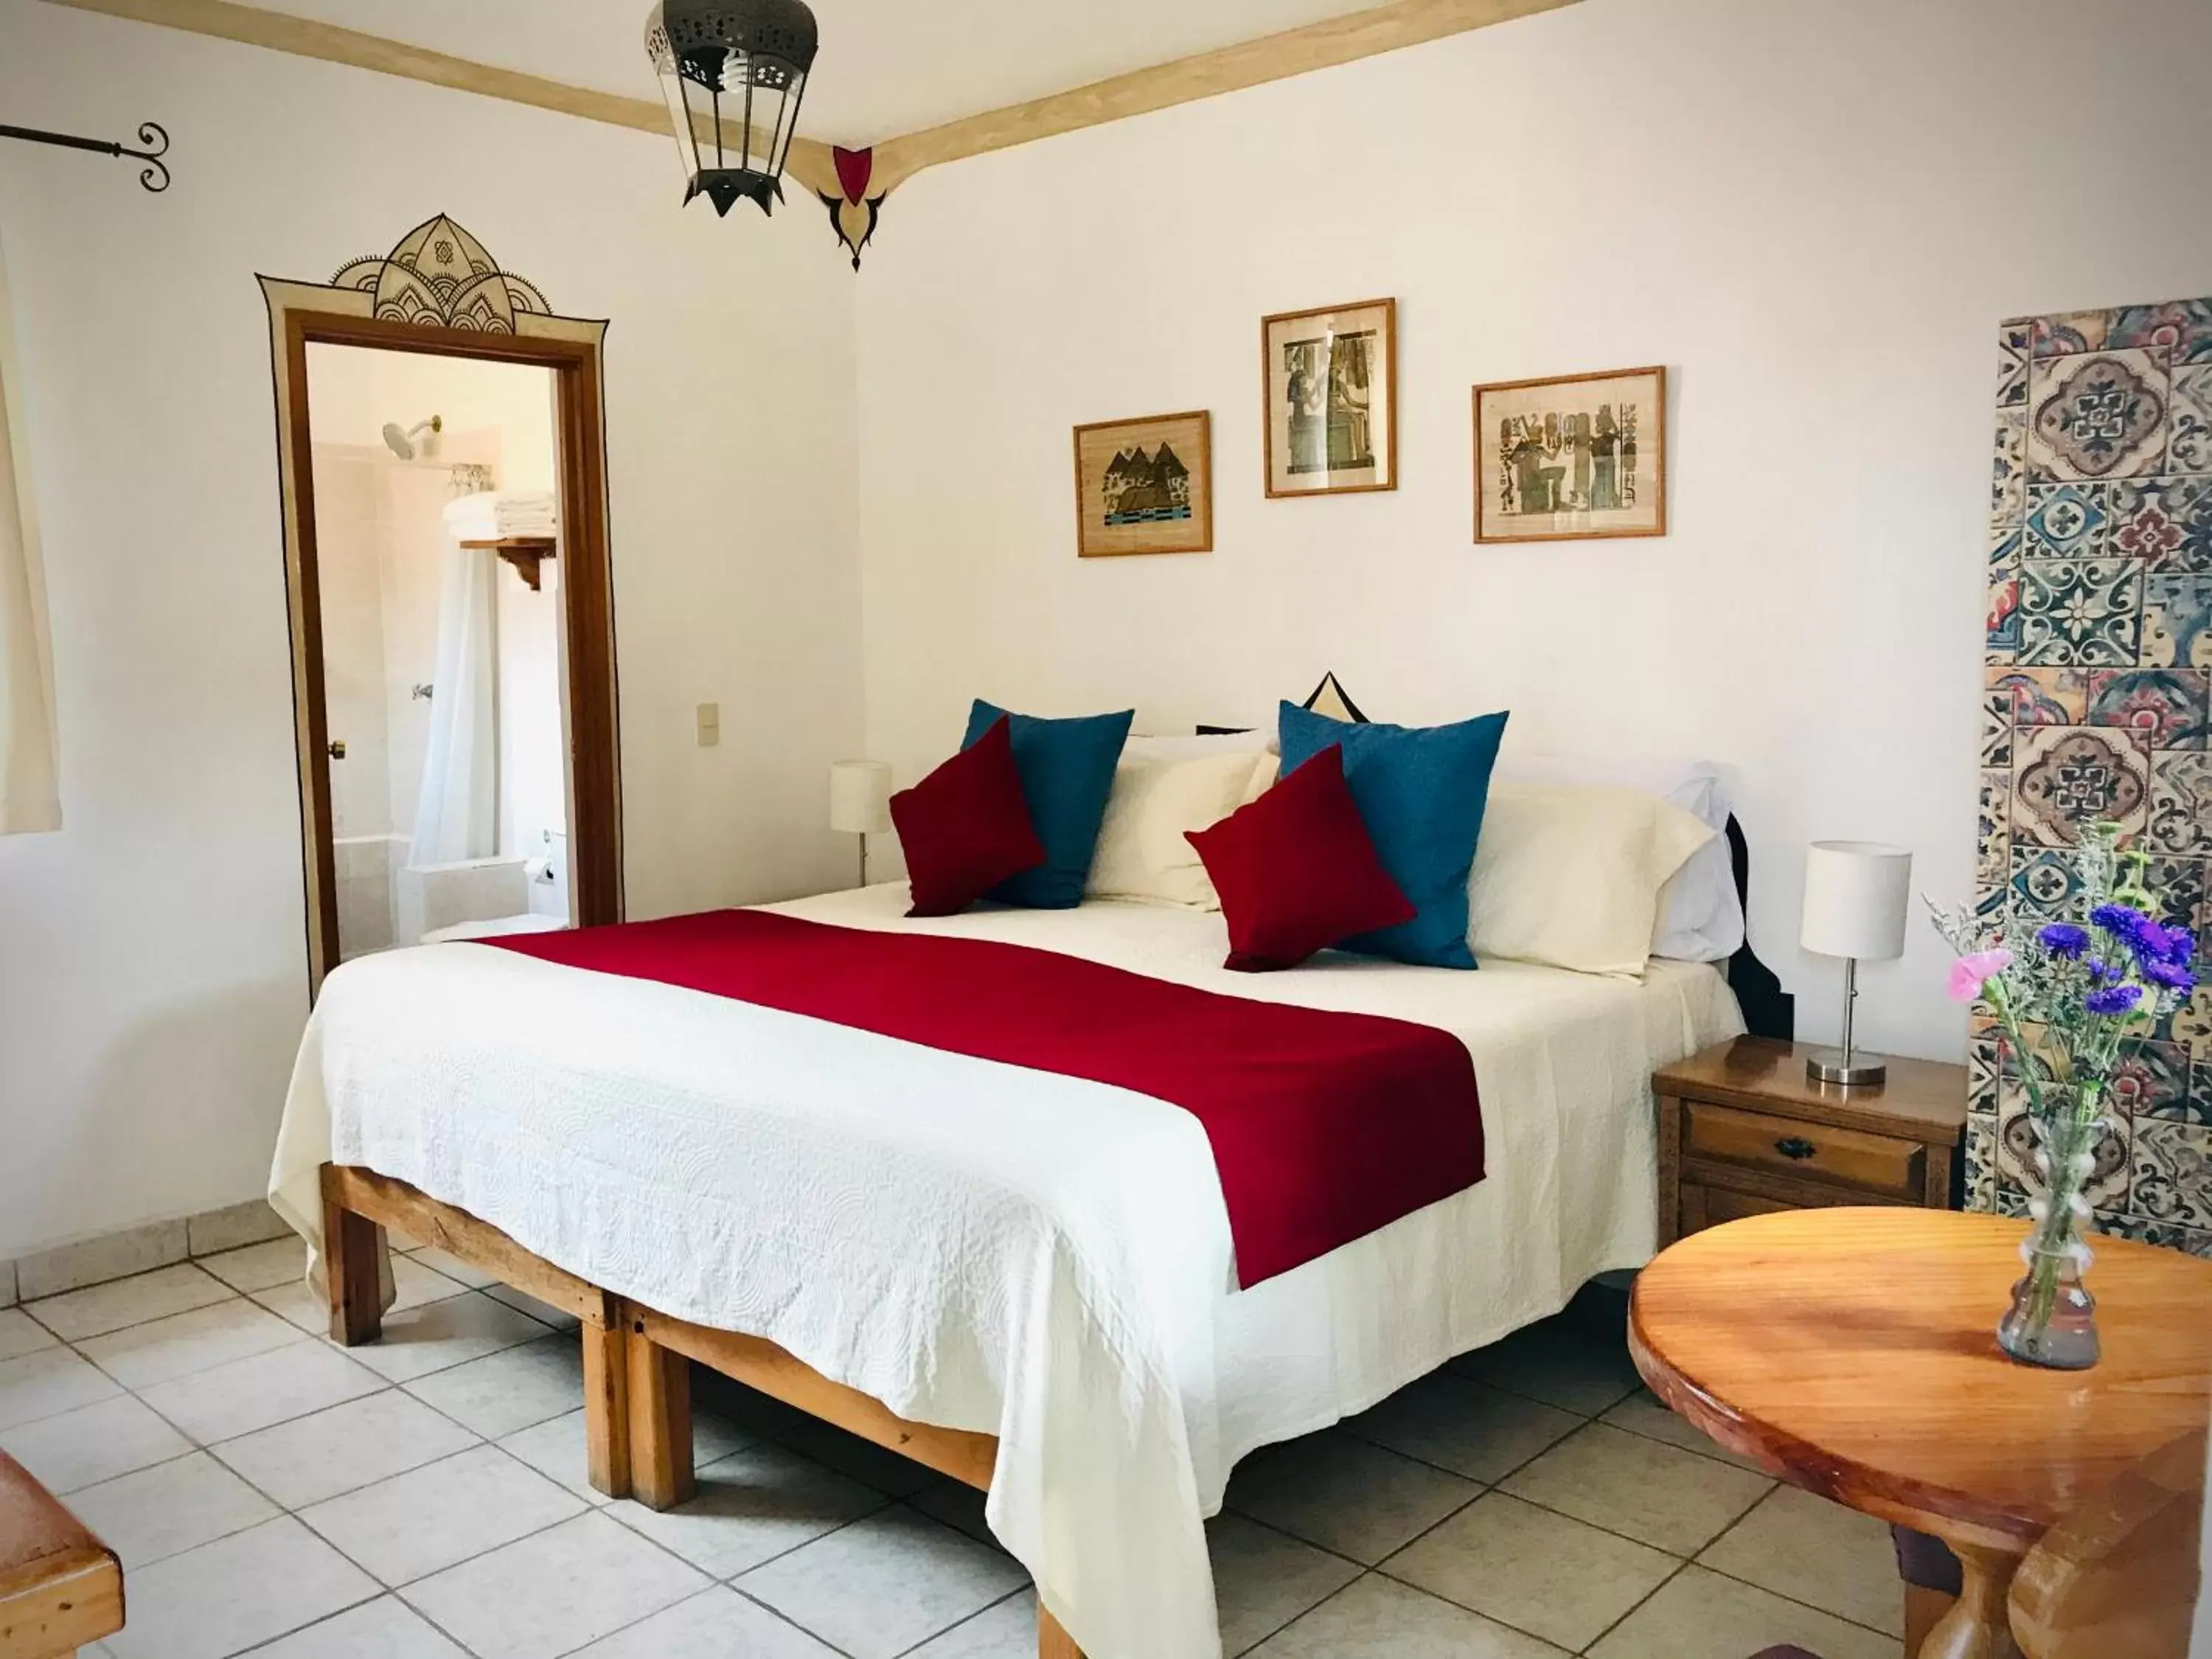 Bed, Room Photo in Hotel Casa Blanca